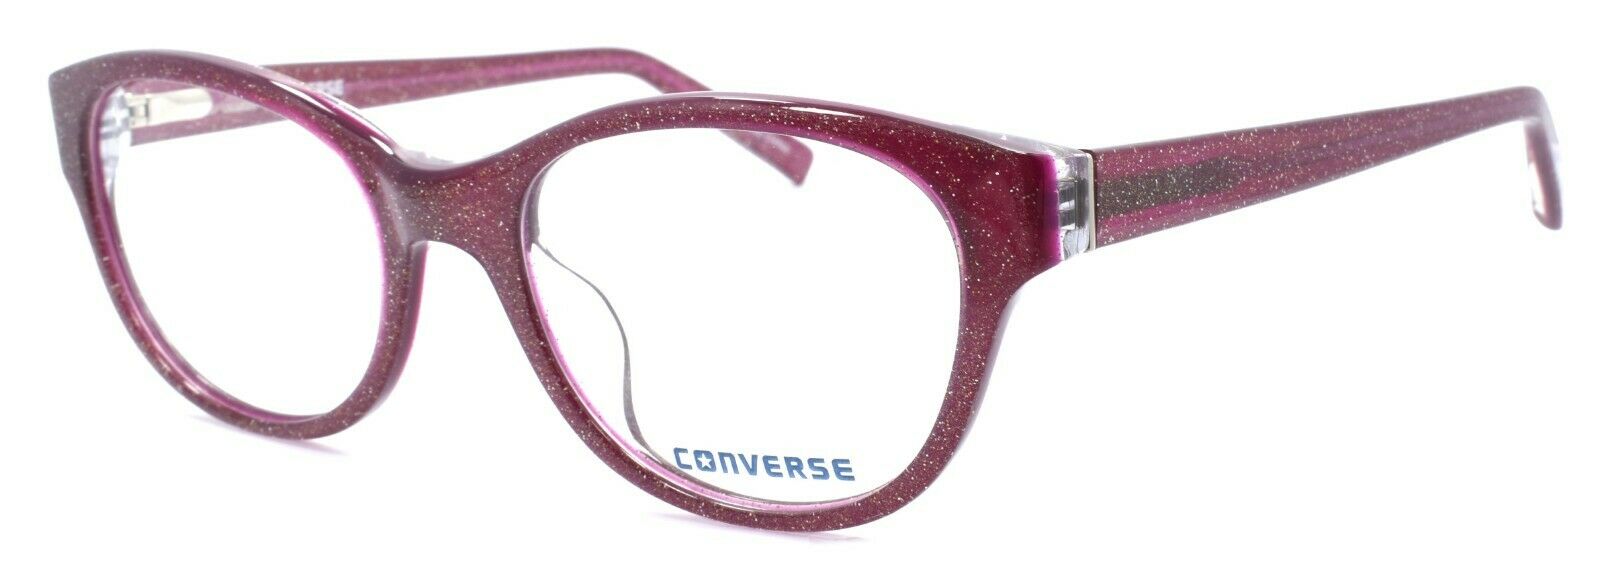 1-CONVERSE Q404 Women's Eyeglasses Frames 52-19-140 Burgundy w/ Glitter + CASE-751286304909-IKSpecs